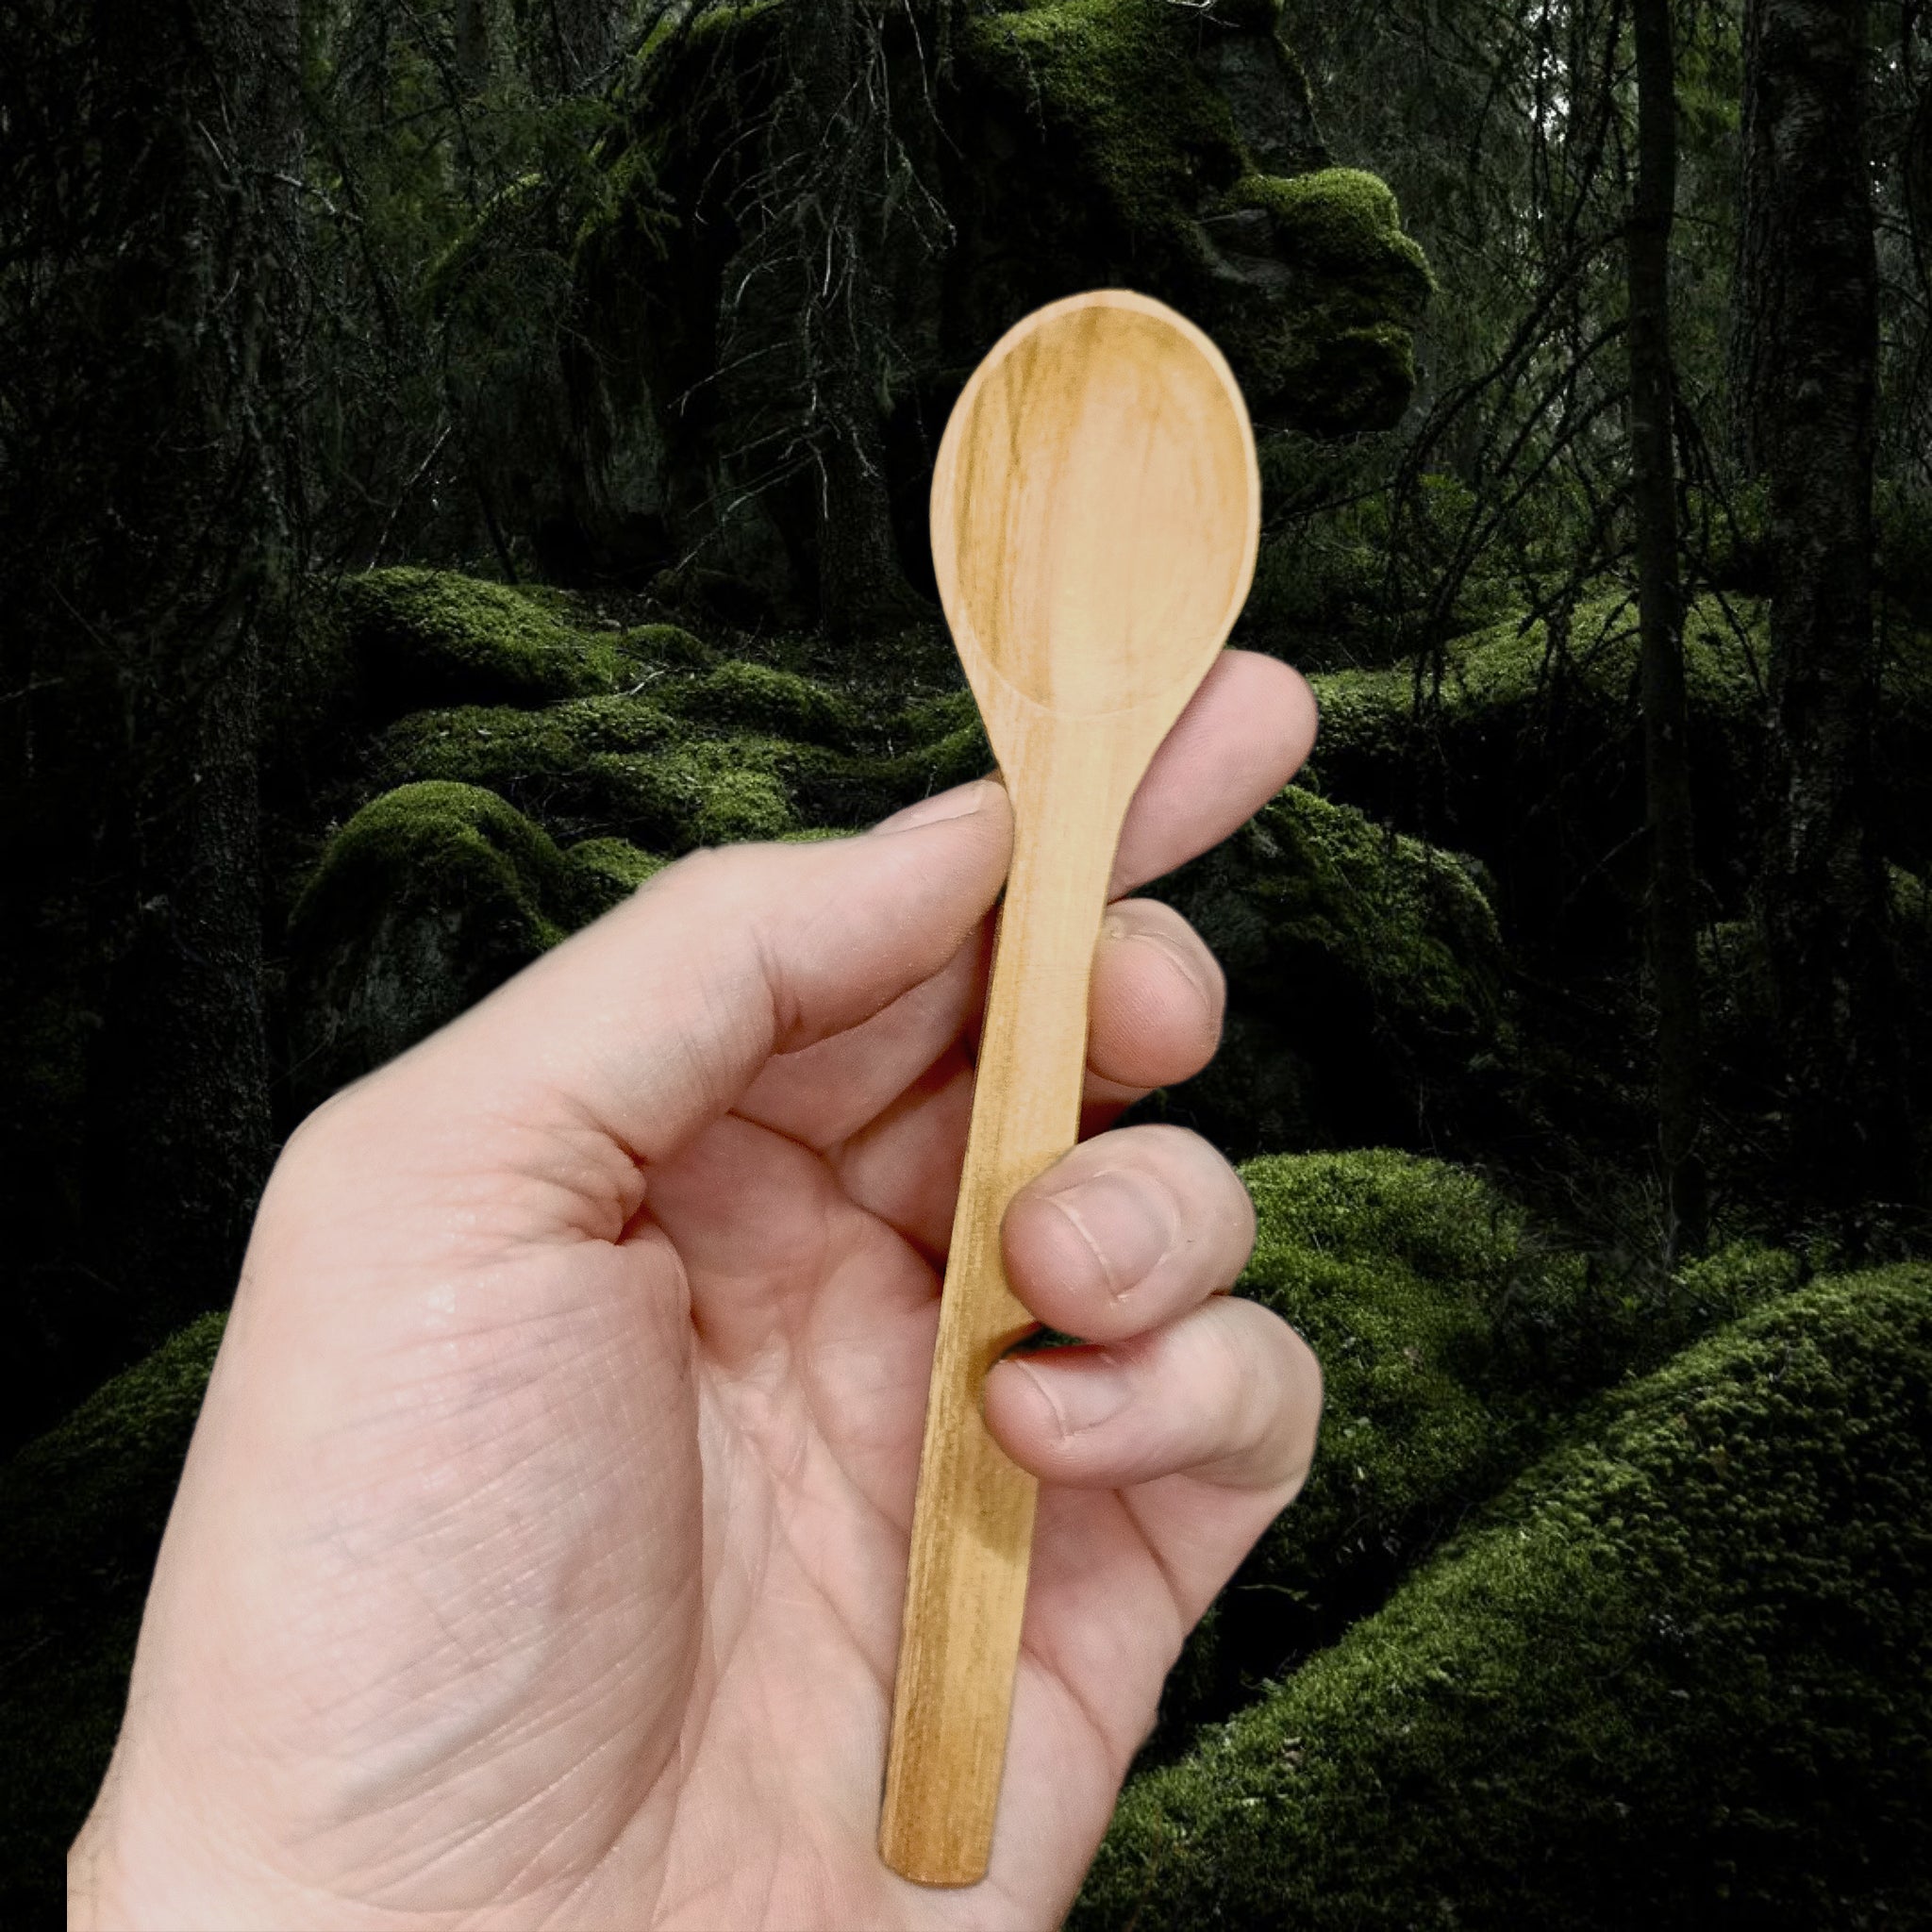 Cherry Wood Viking / Medieval Spoon in Hand